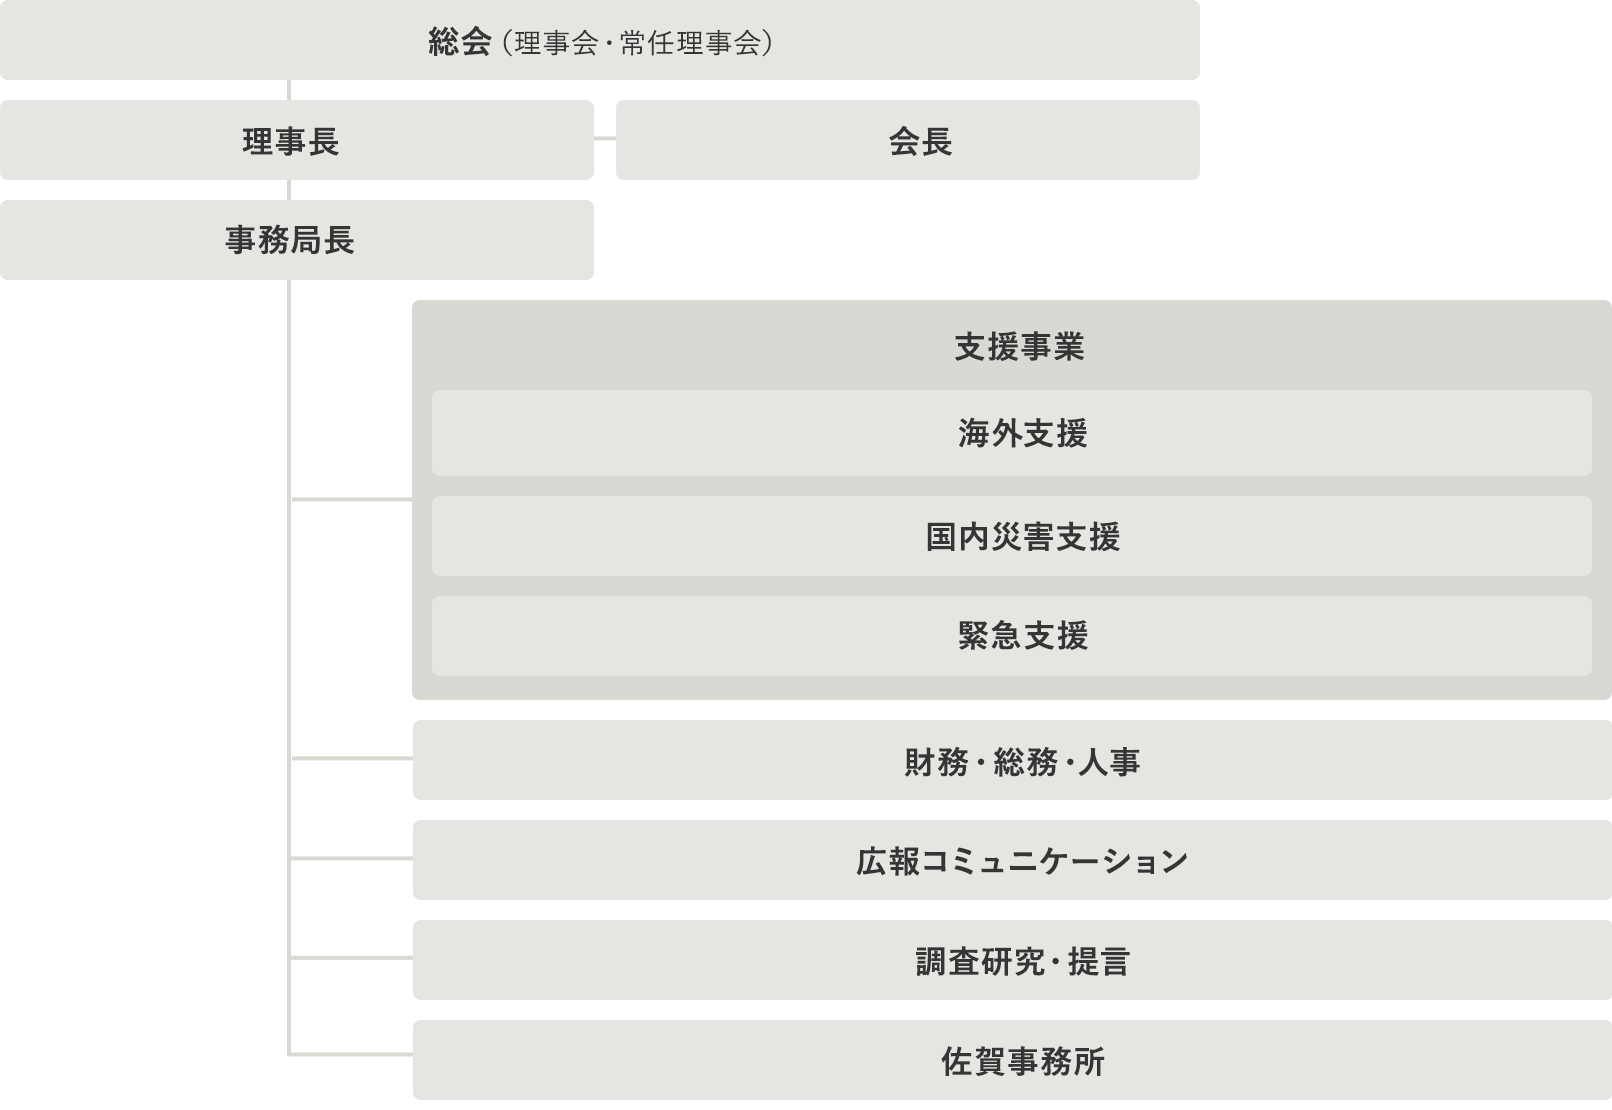 AAR Japanの組織図
総会　理事長　事務局長　支援事業　などに分かれている